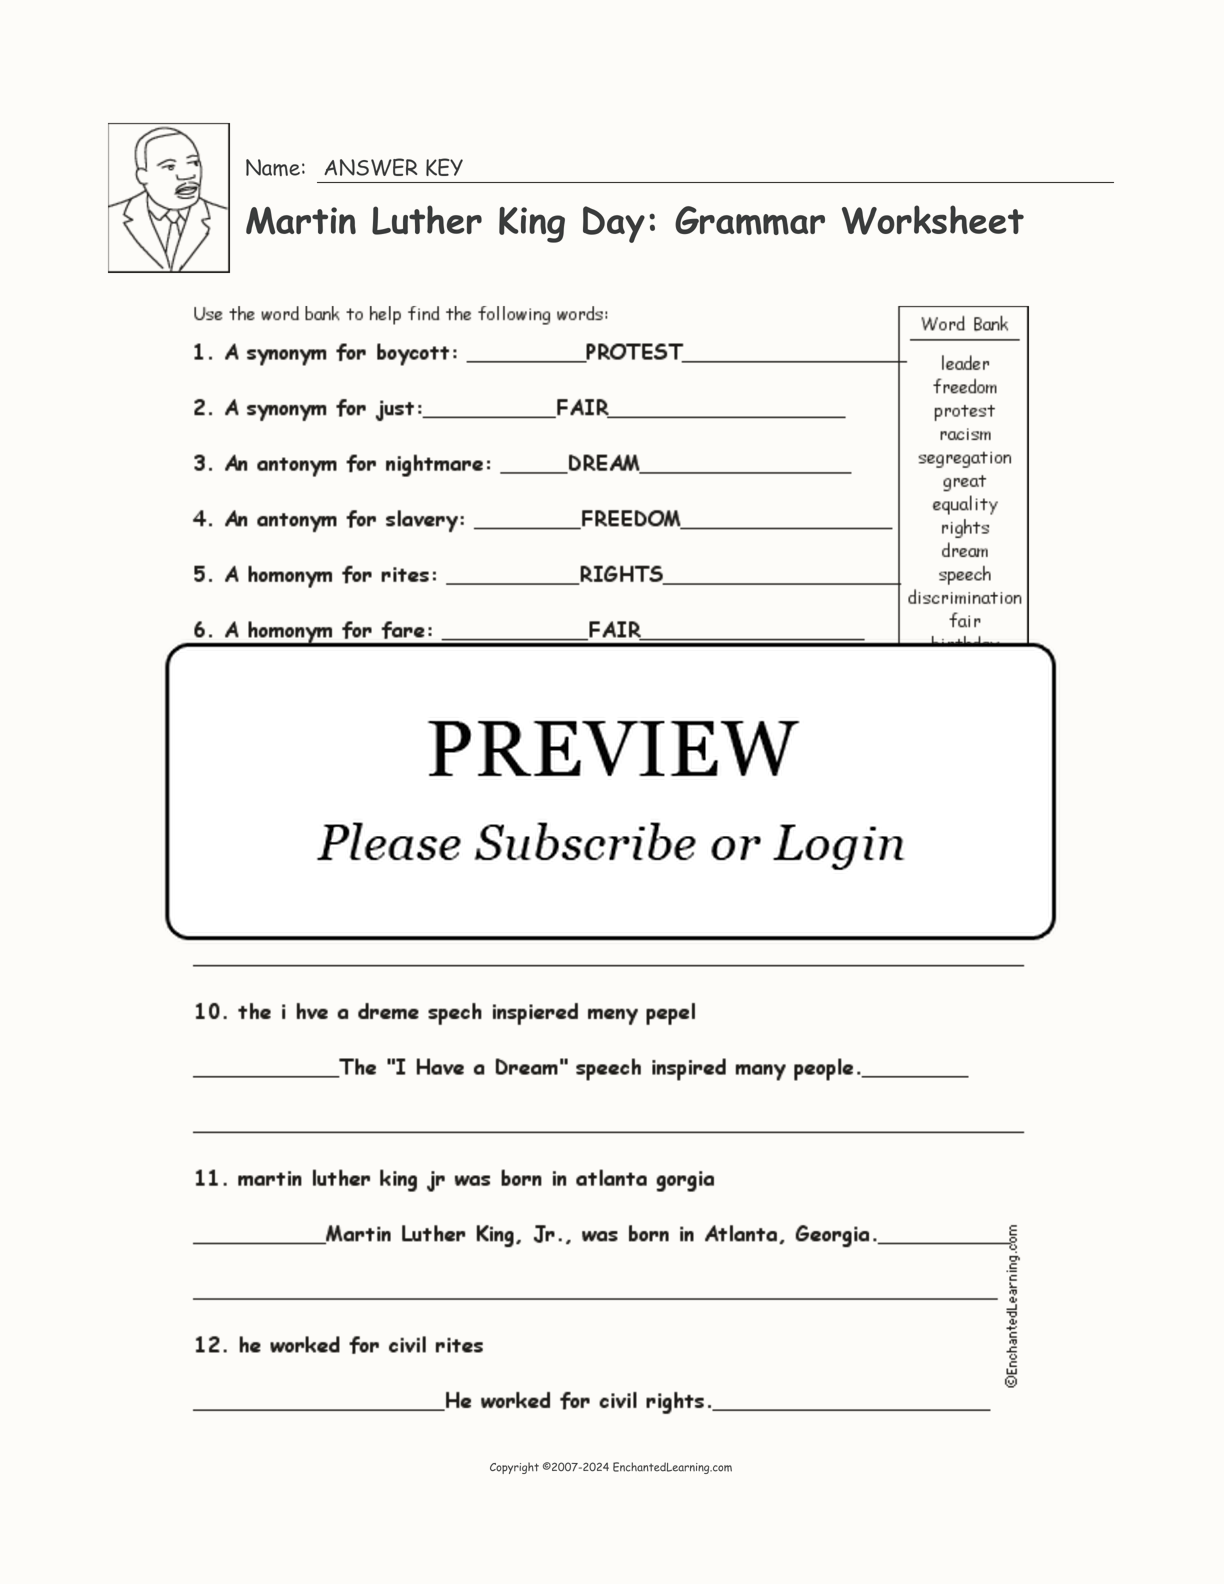 Martin Luther King Day: Grammar Worksheet interactive worksheet page 2